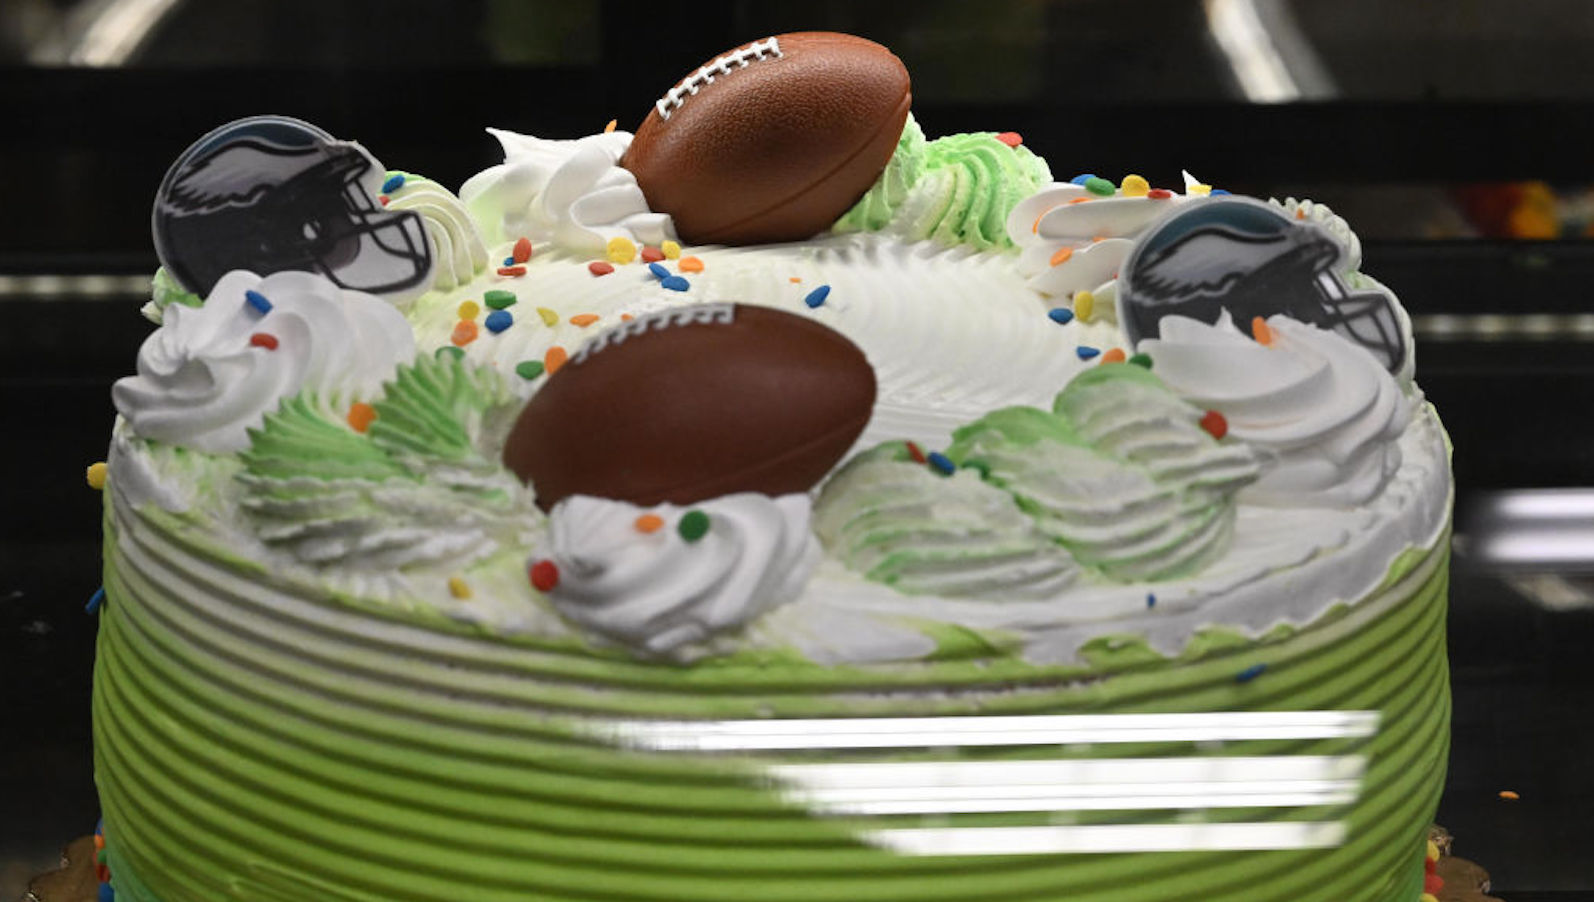 A football cake